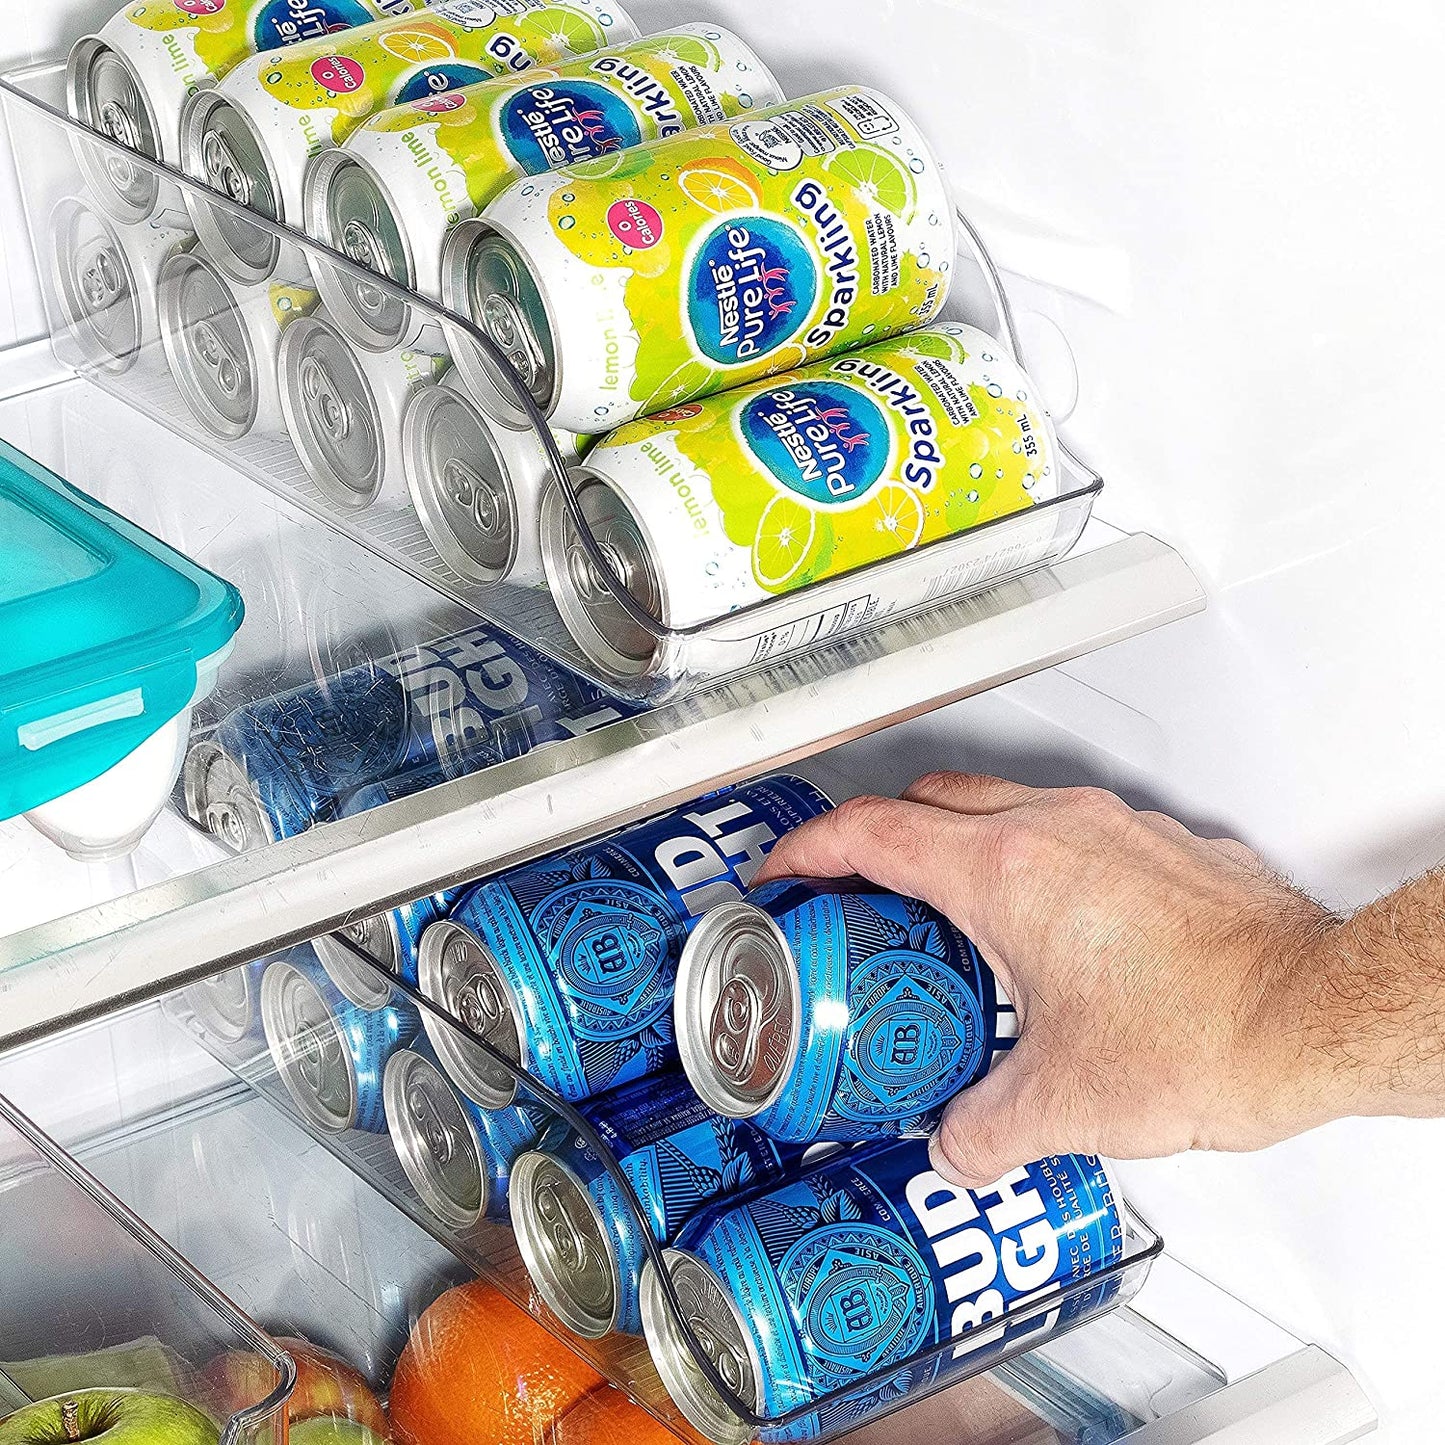 Refrigerator Organizer Bins